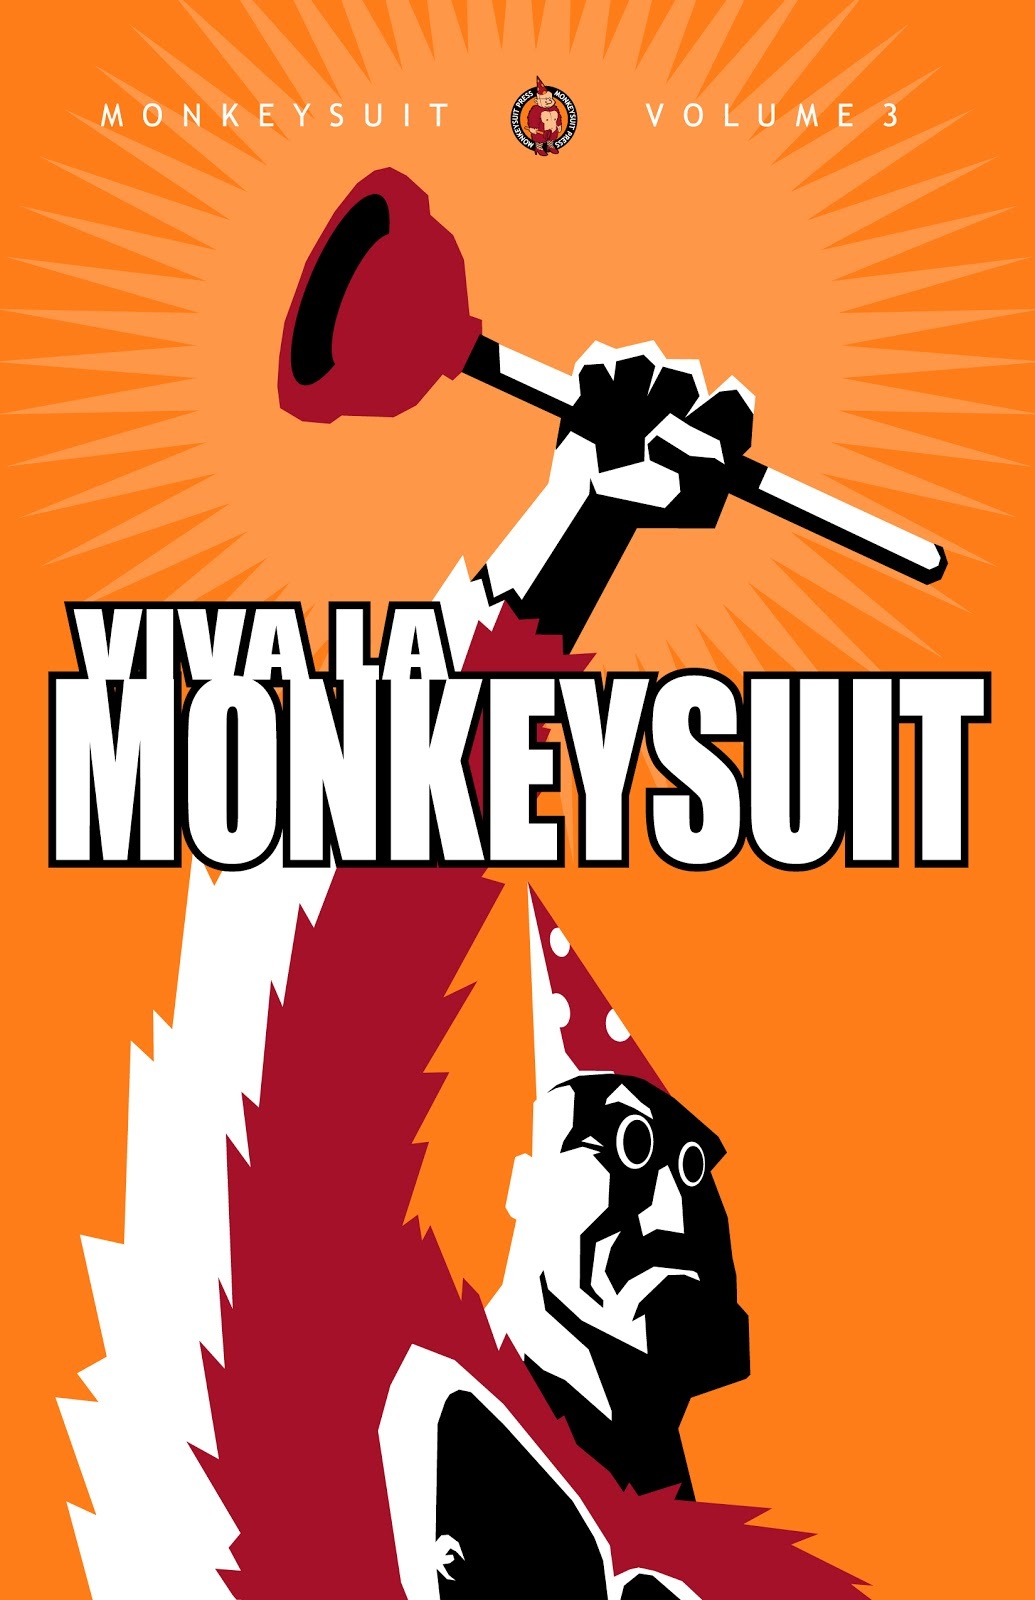 Monkeysuit Volume 3 Viva La Monkeysuit